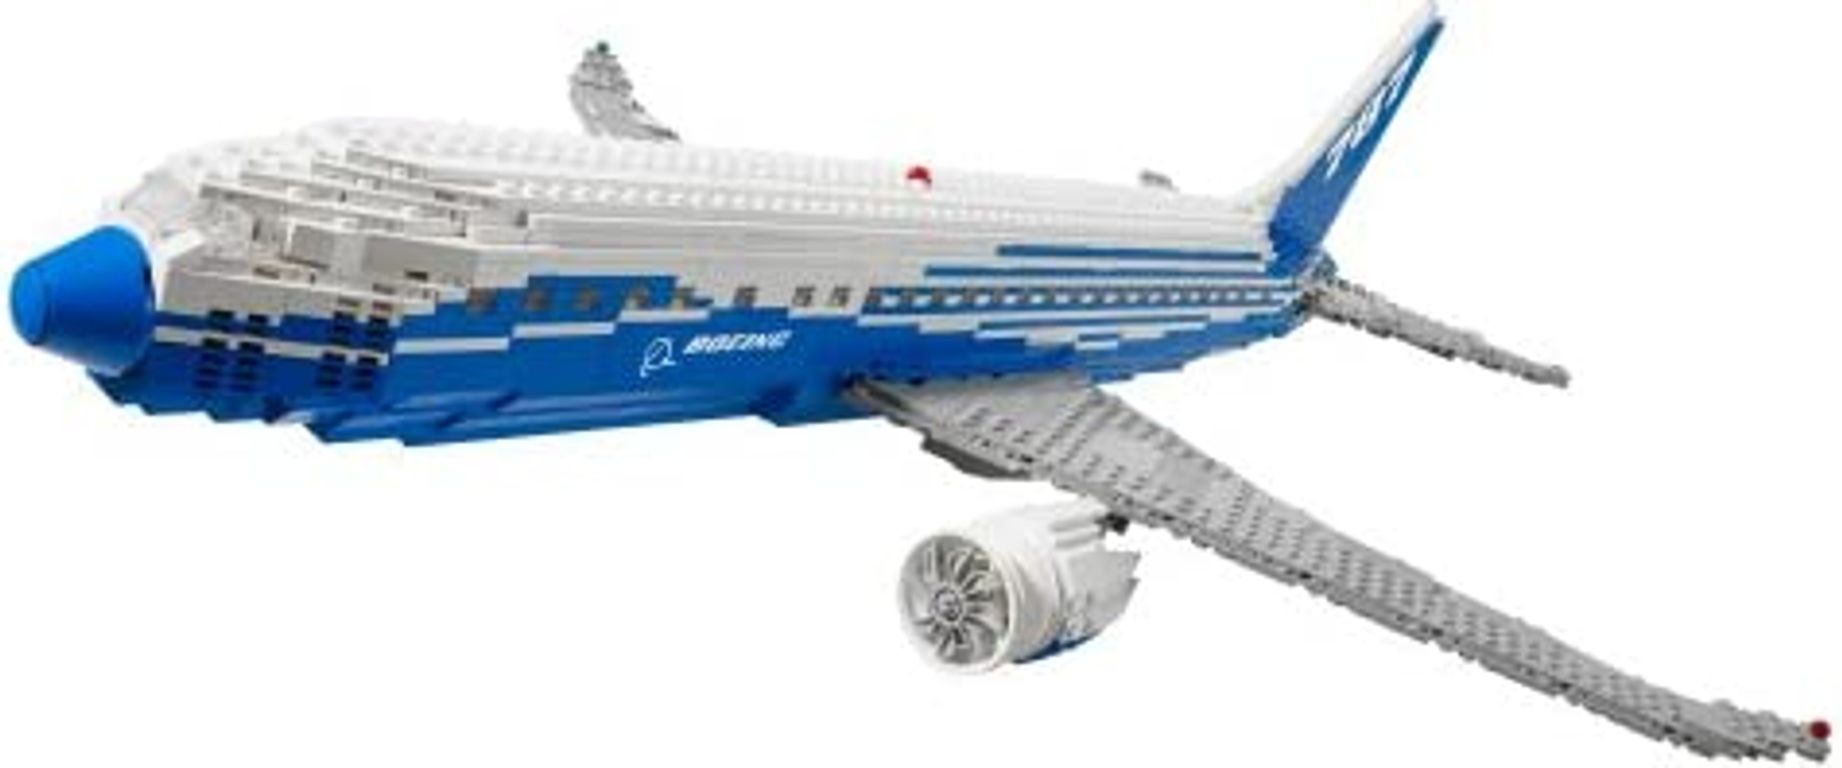 Boeing 787 Dreamliner components